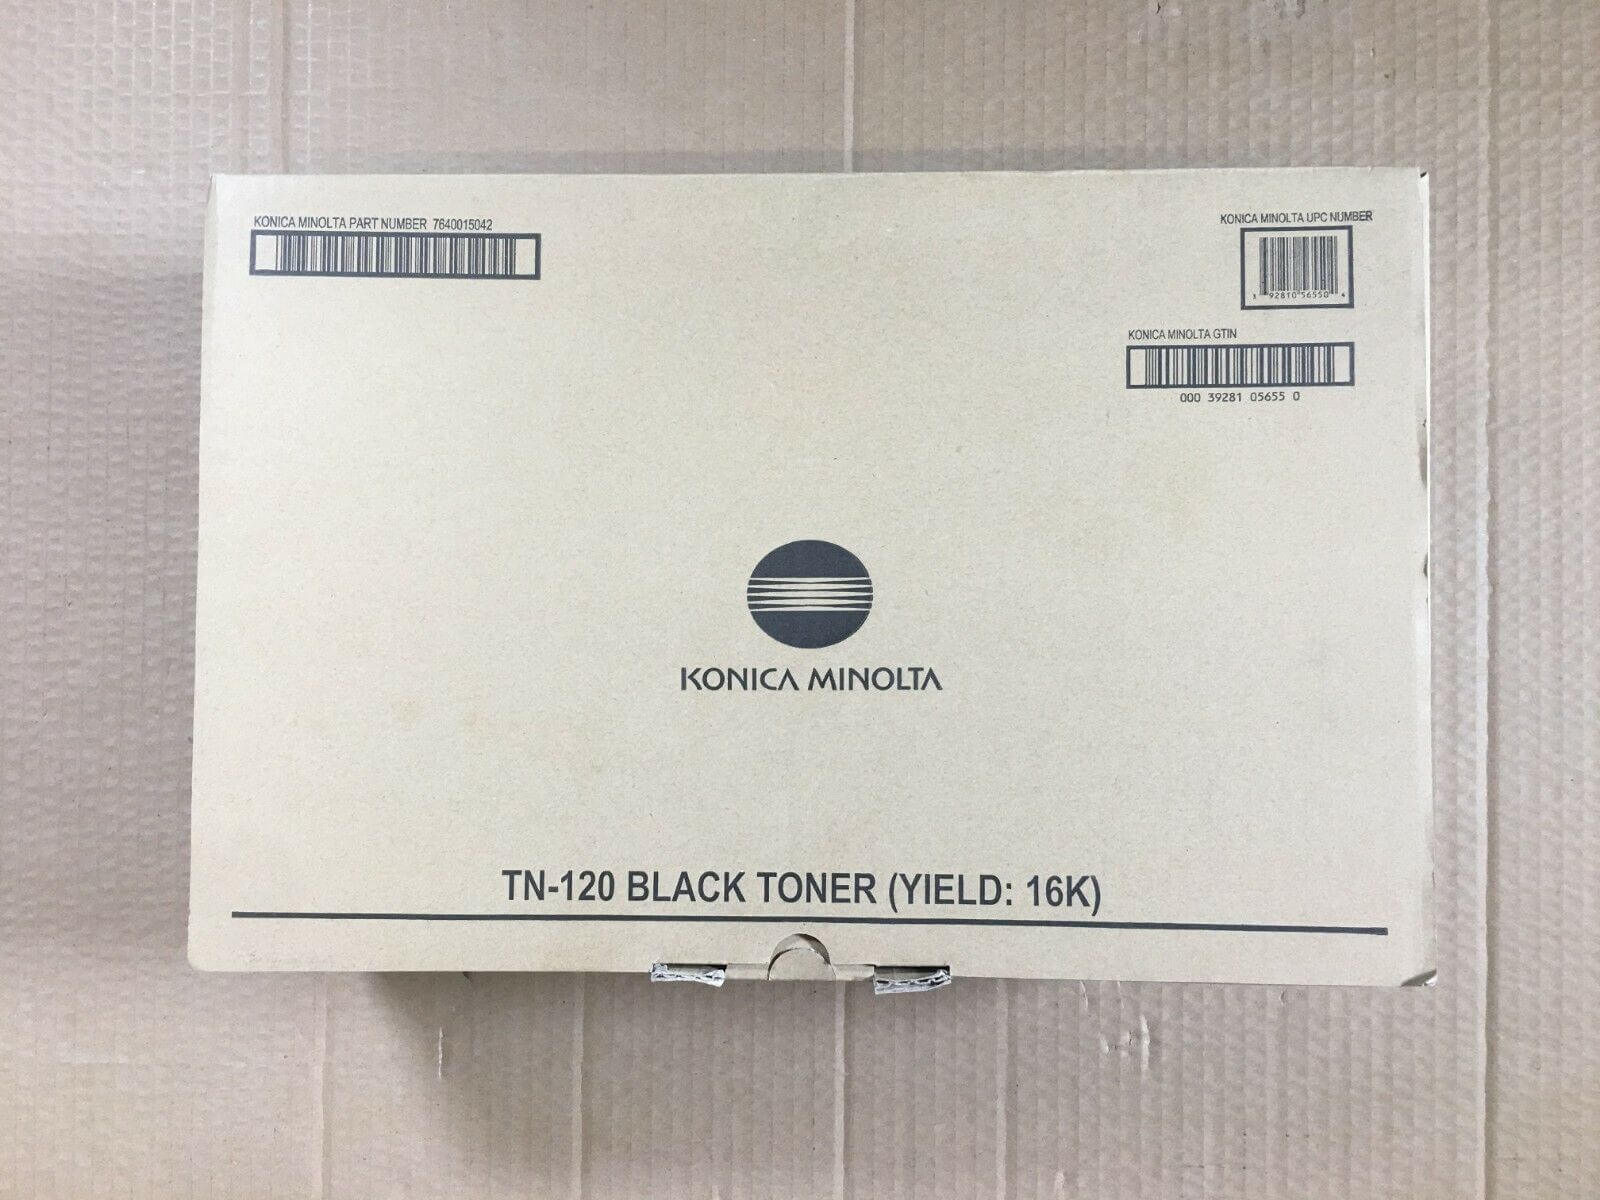 Genuine Konica TN-120 Black Toner bizhub 25 Yield 16K Same Day Shipping - copier-clearance-center